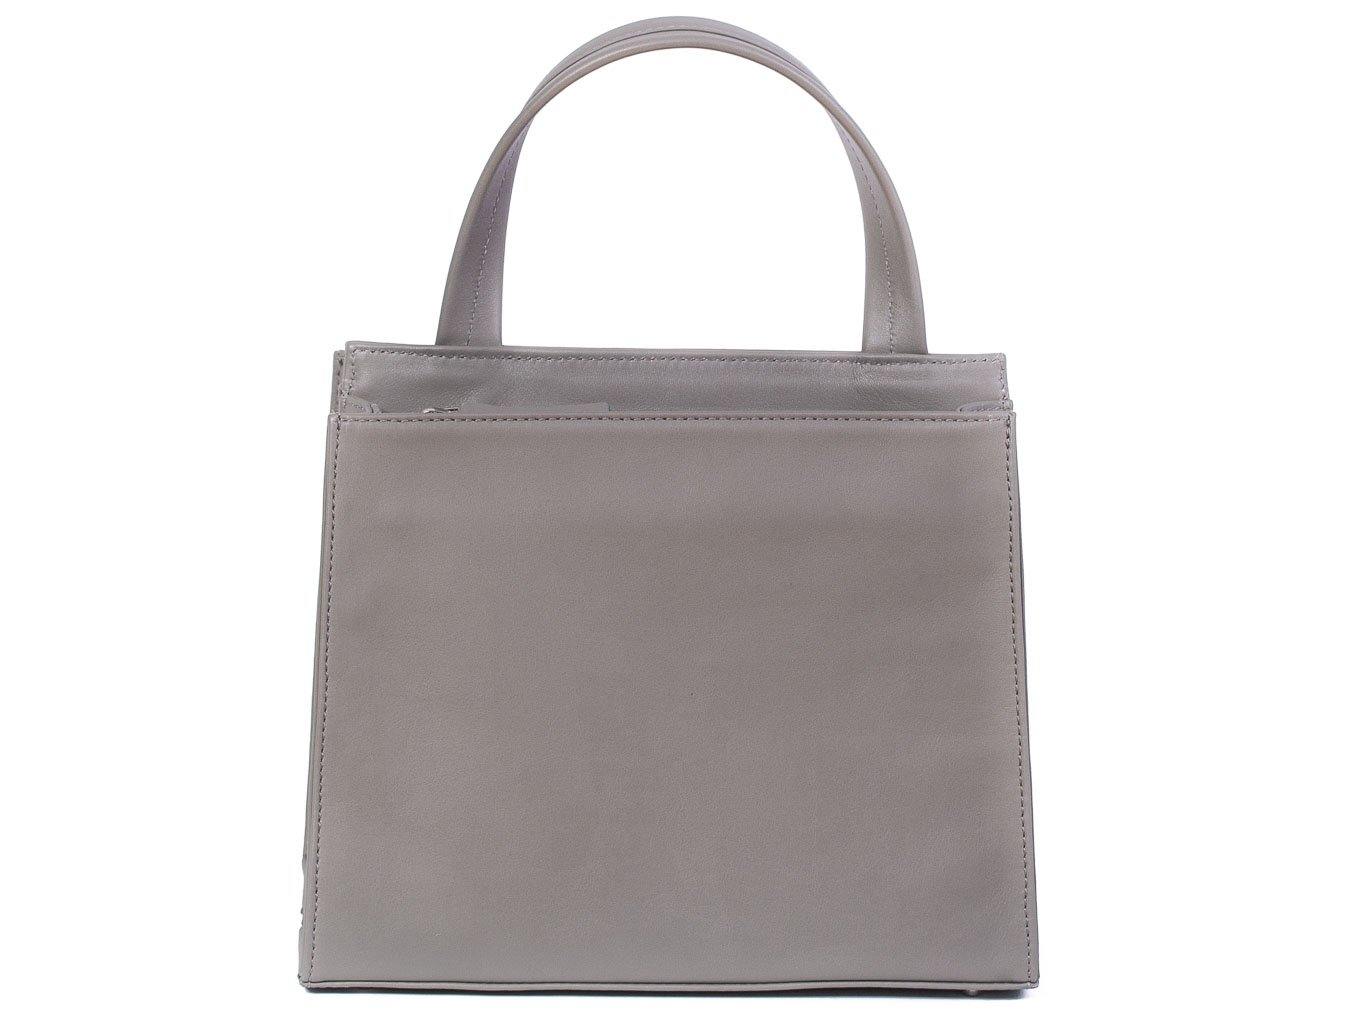 Top Handle Springbok Handbag in Slate Grey with a stripe feature by Sherene Melinda back